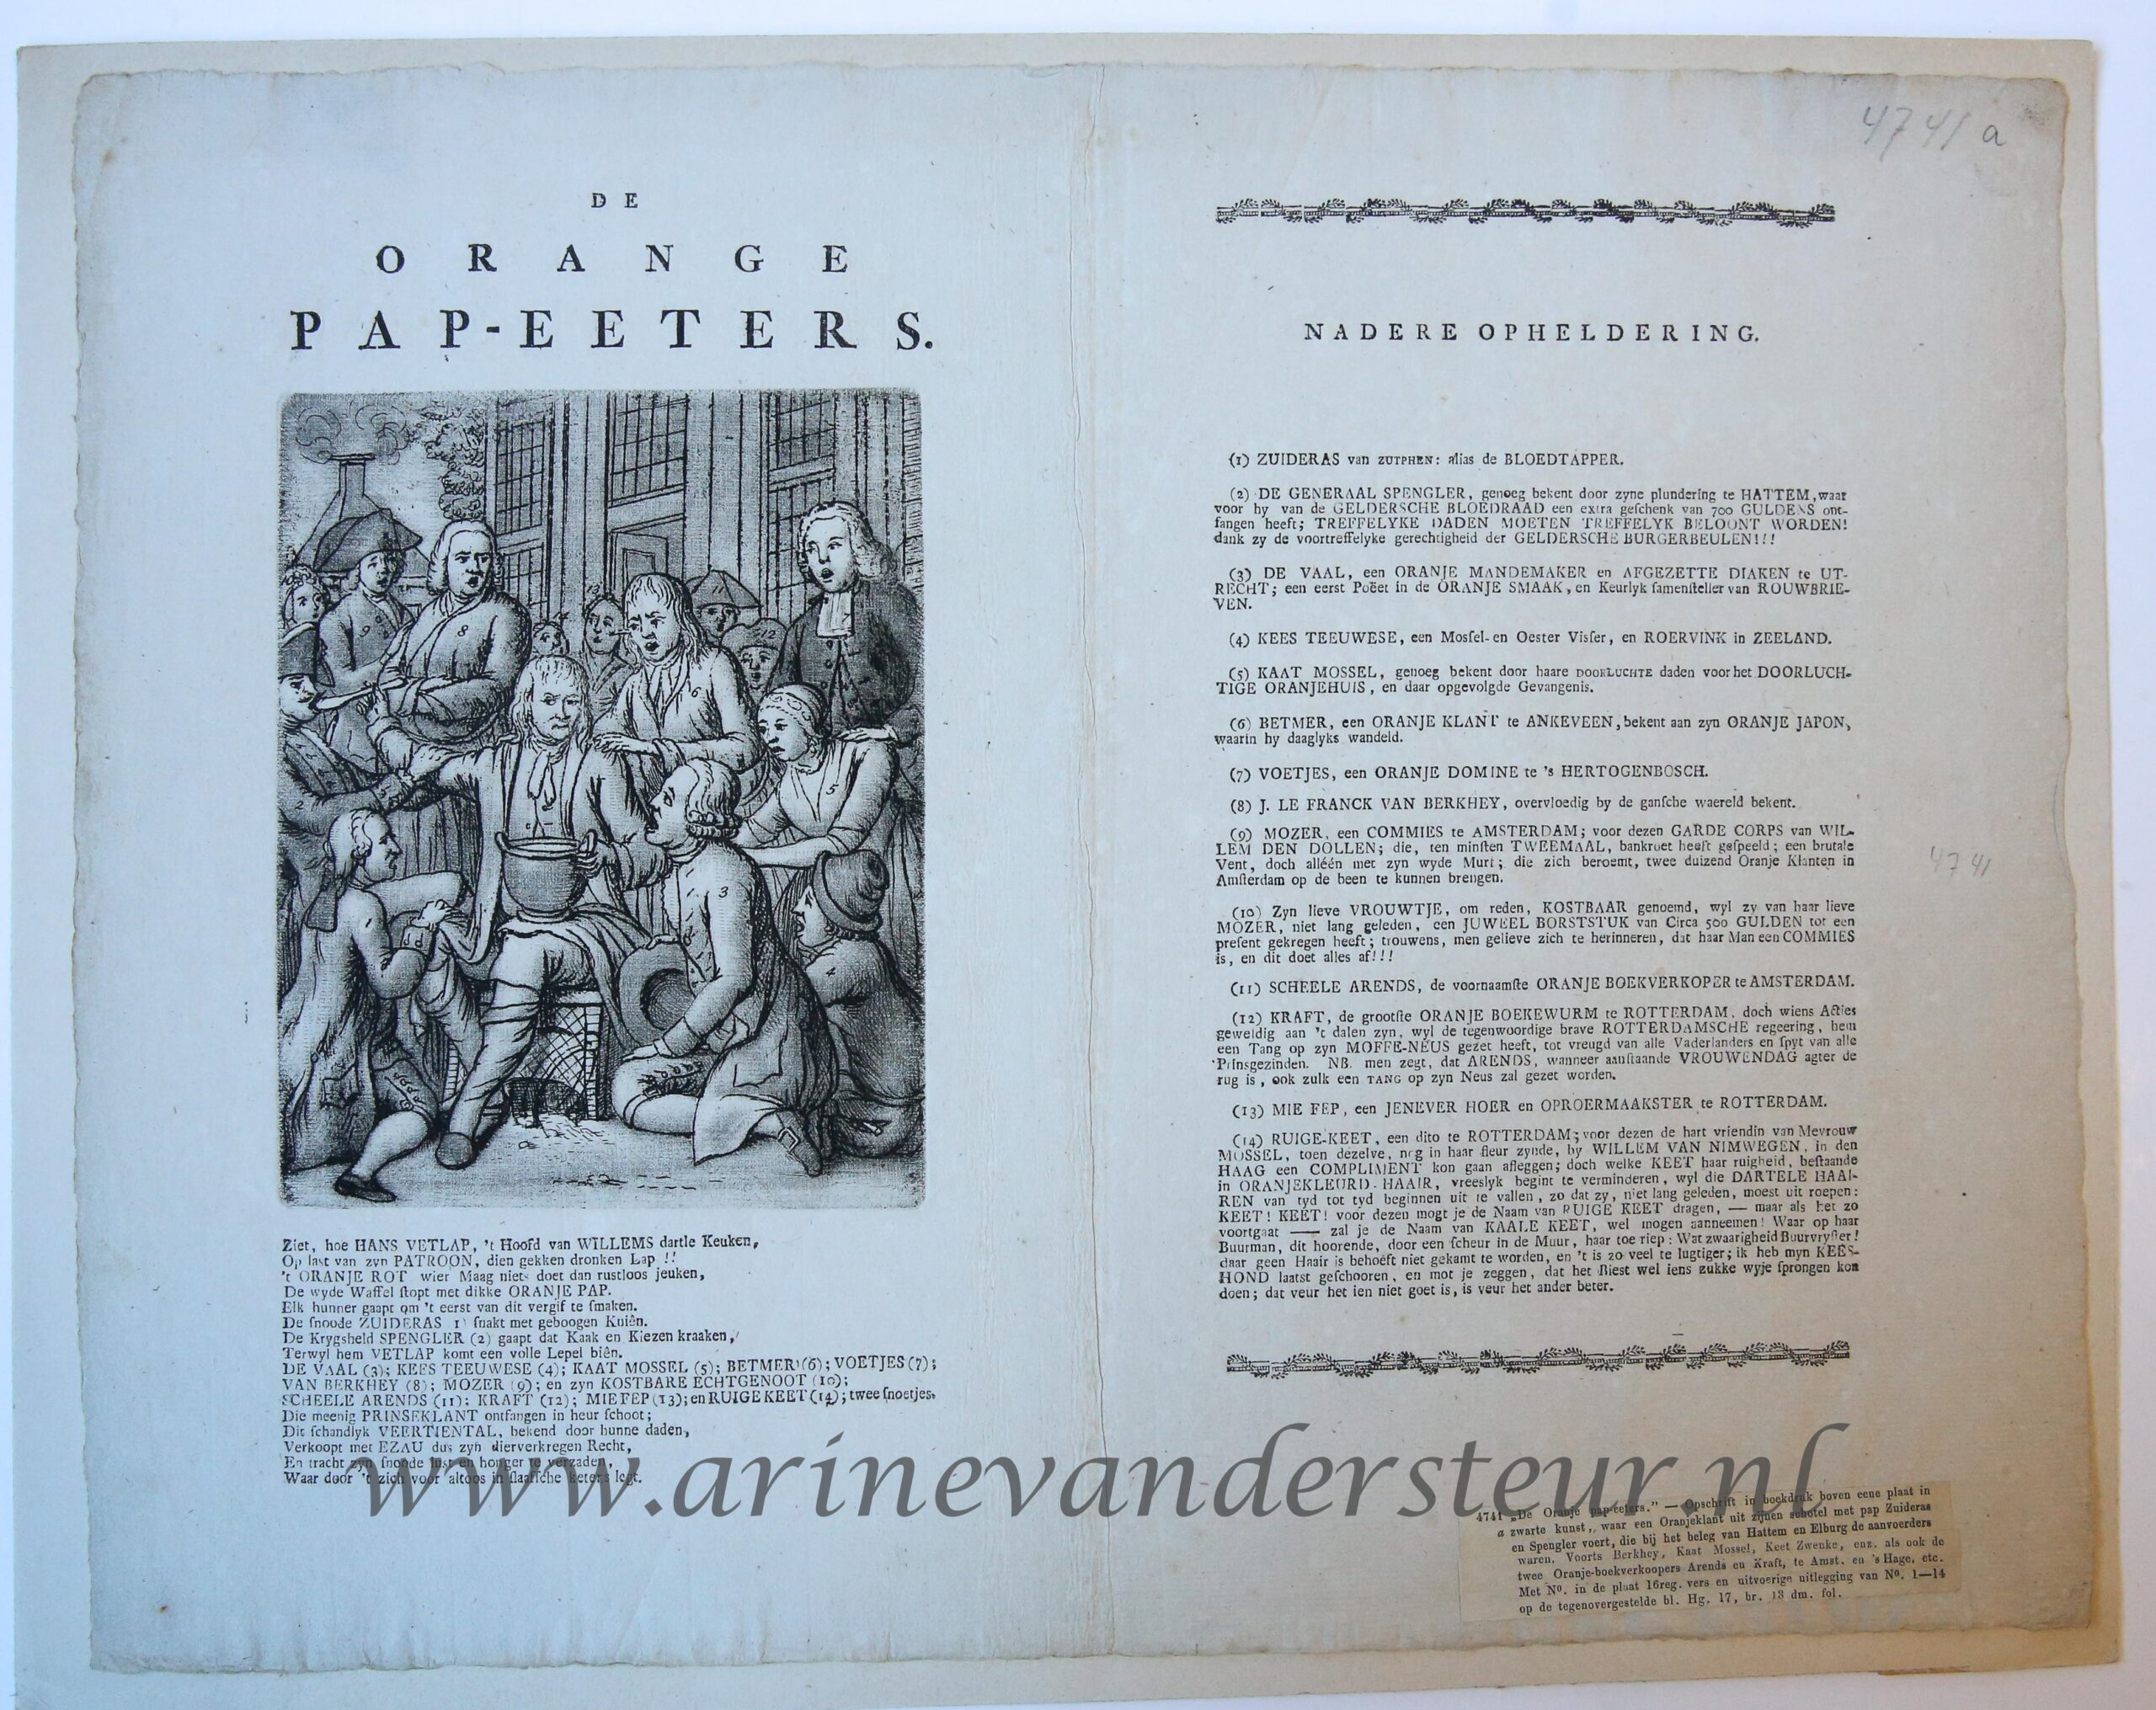 [Mezzotint/Satirical print/Spotprent, Orangist] "De Orange pap-eeters", with printed text, 1786.